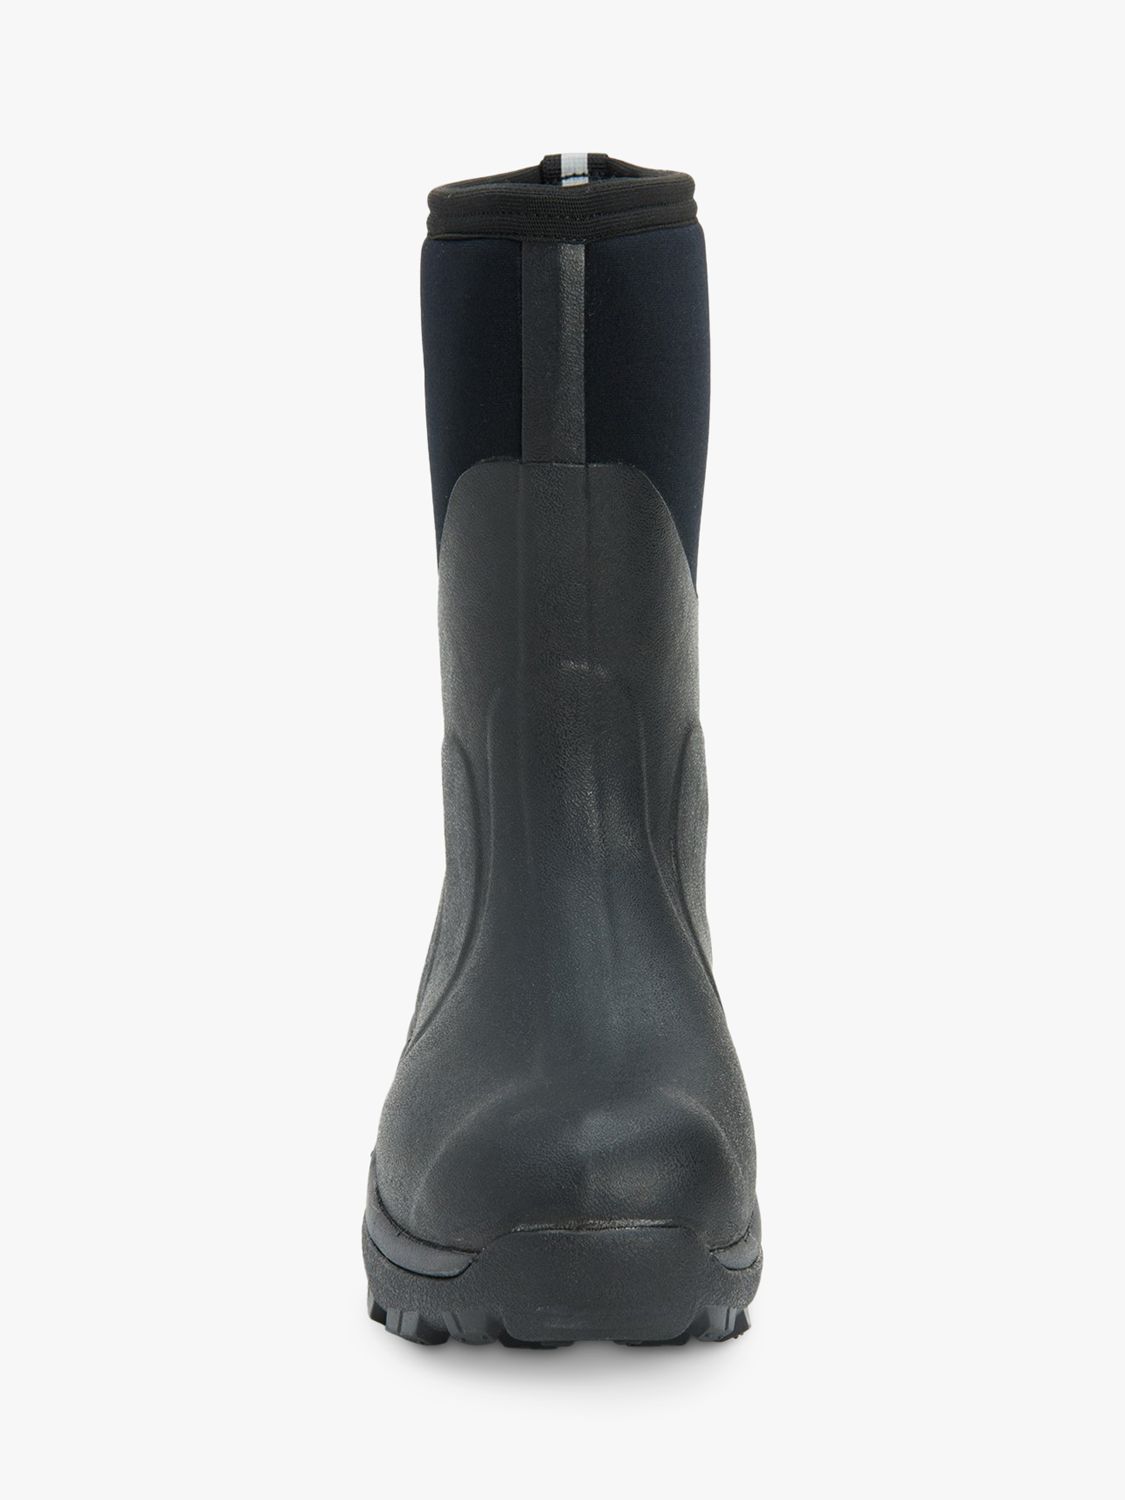 Buy Muck Arctic Sport Pull On Short Wellington Boots, Black Online at johnlewis.com